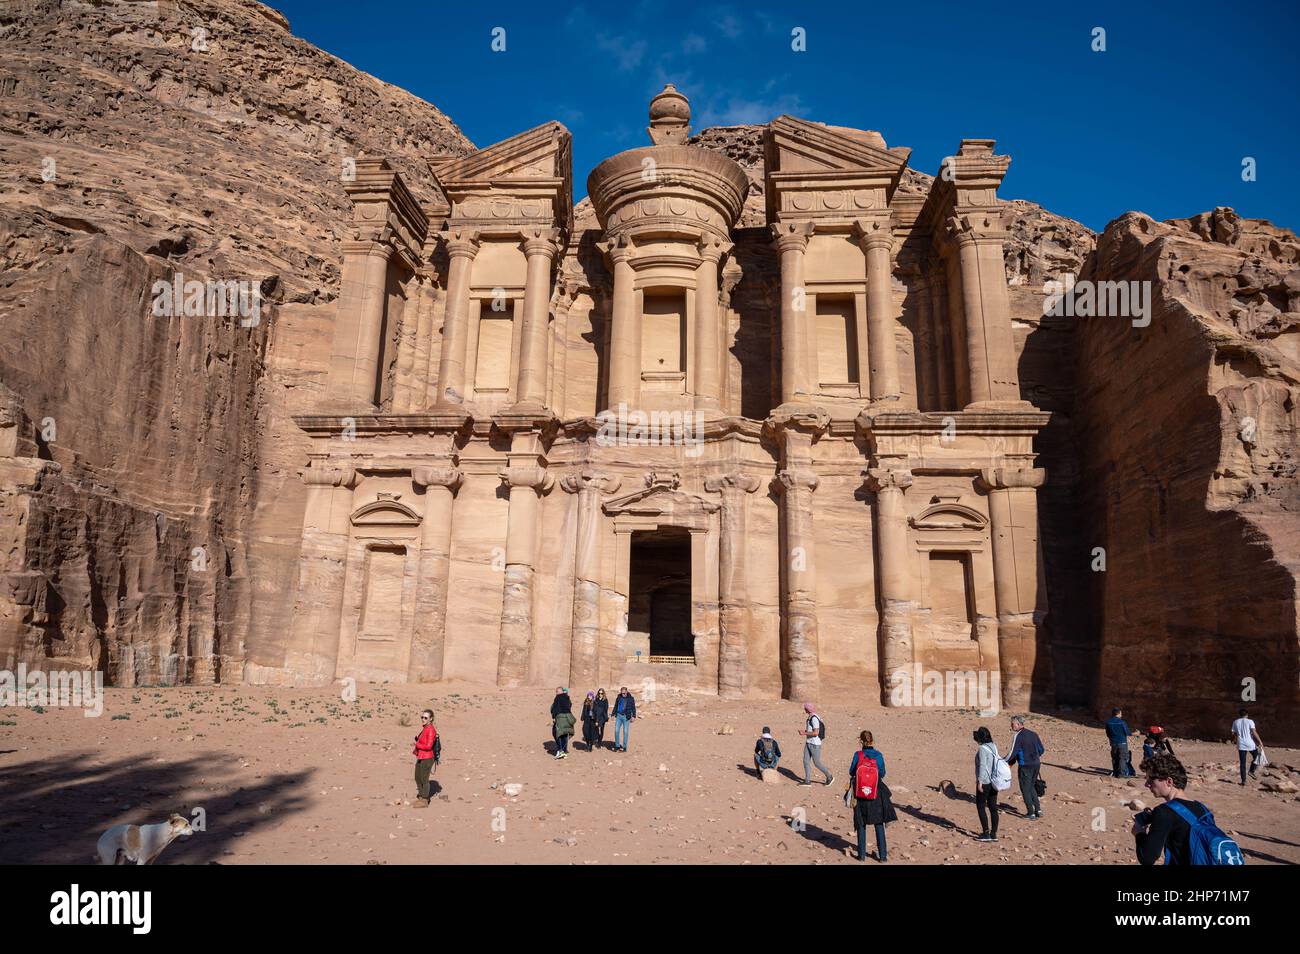 The Monastery, Petra, Jordan Stock Photo